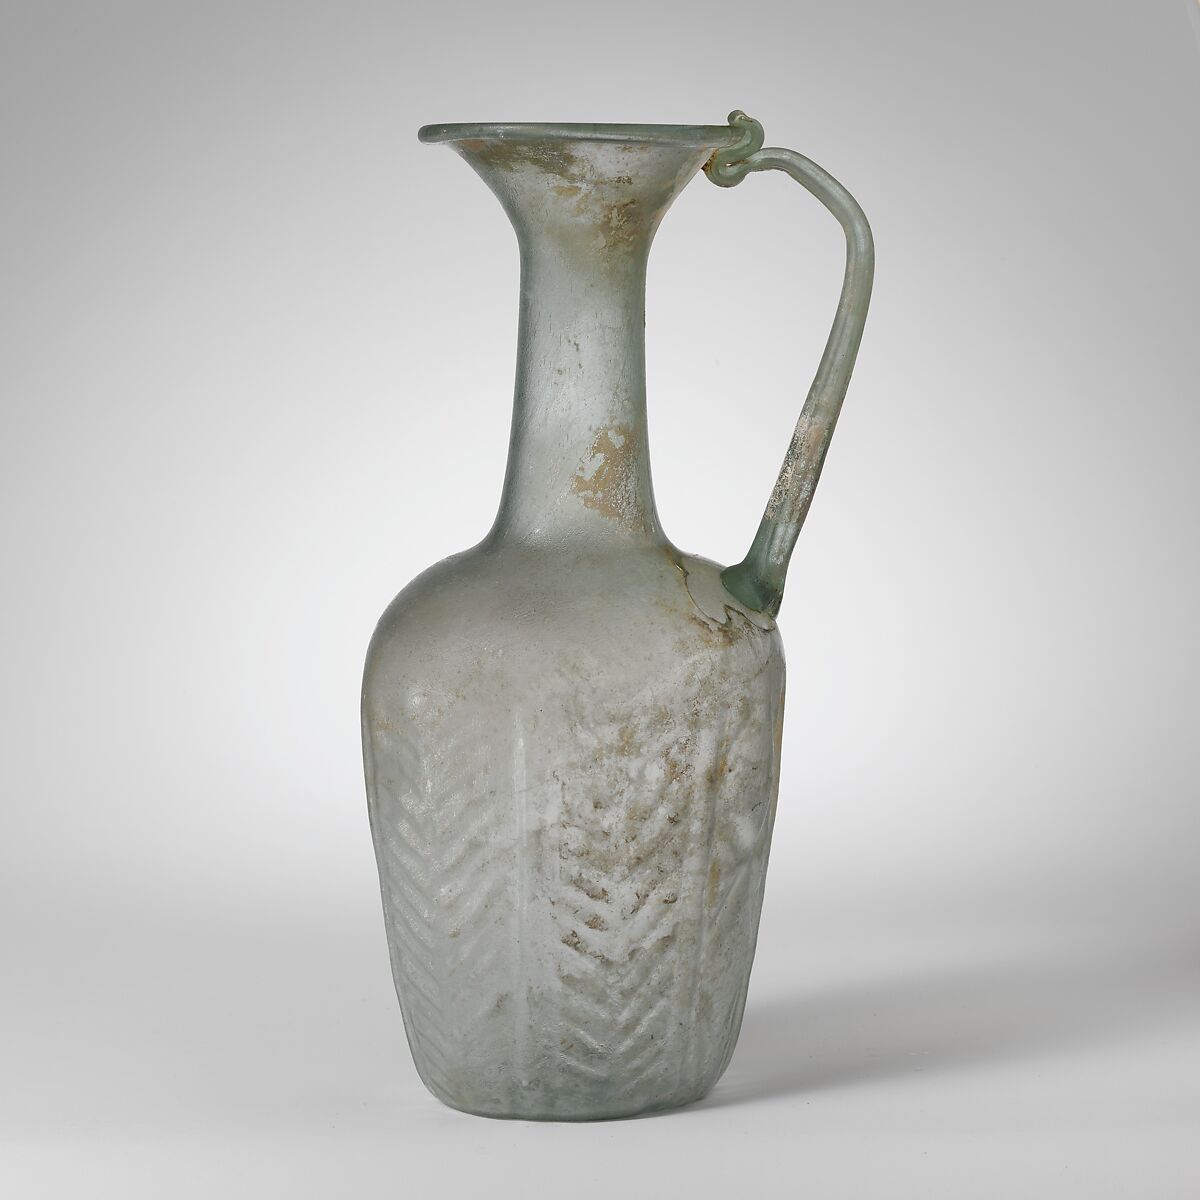 Glass hexagonal jug, Glass, Roman, Syrian 